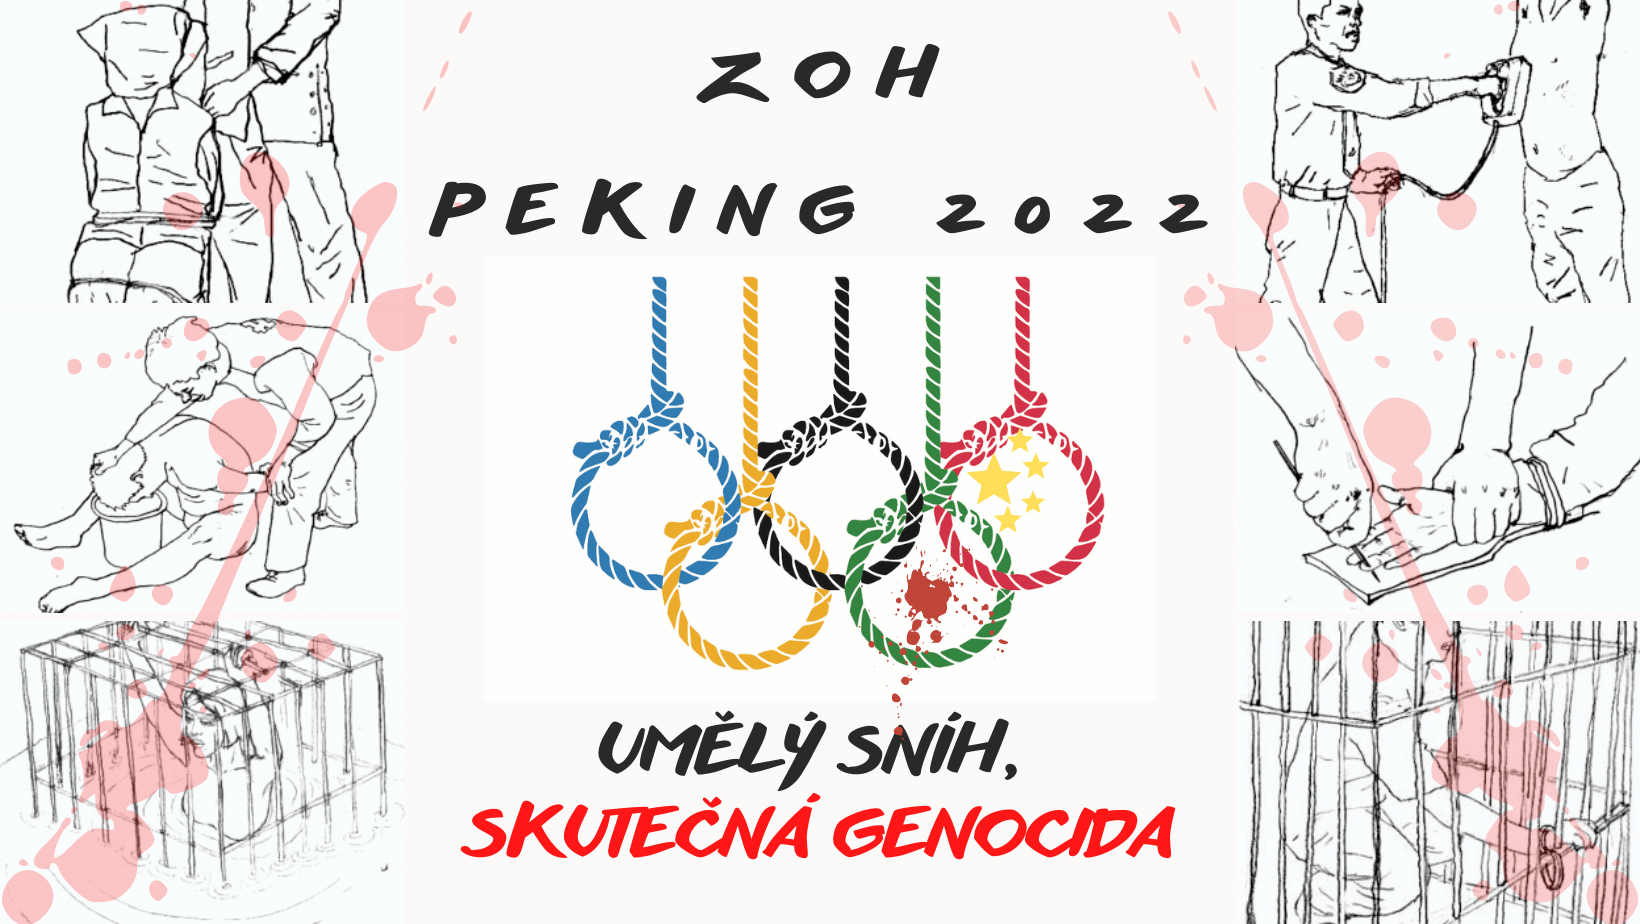 Peking 2022 umely snih skutecna genocida 4.2.2022